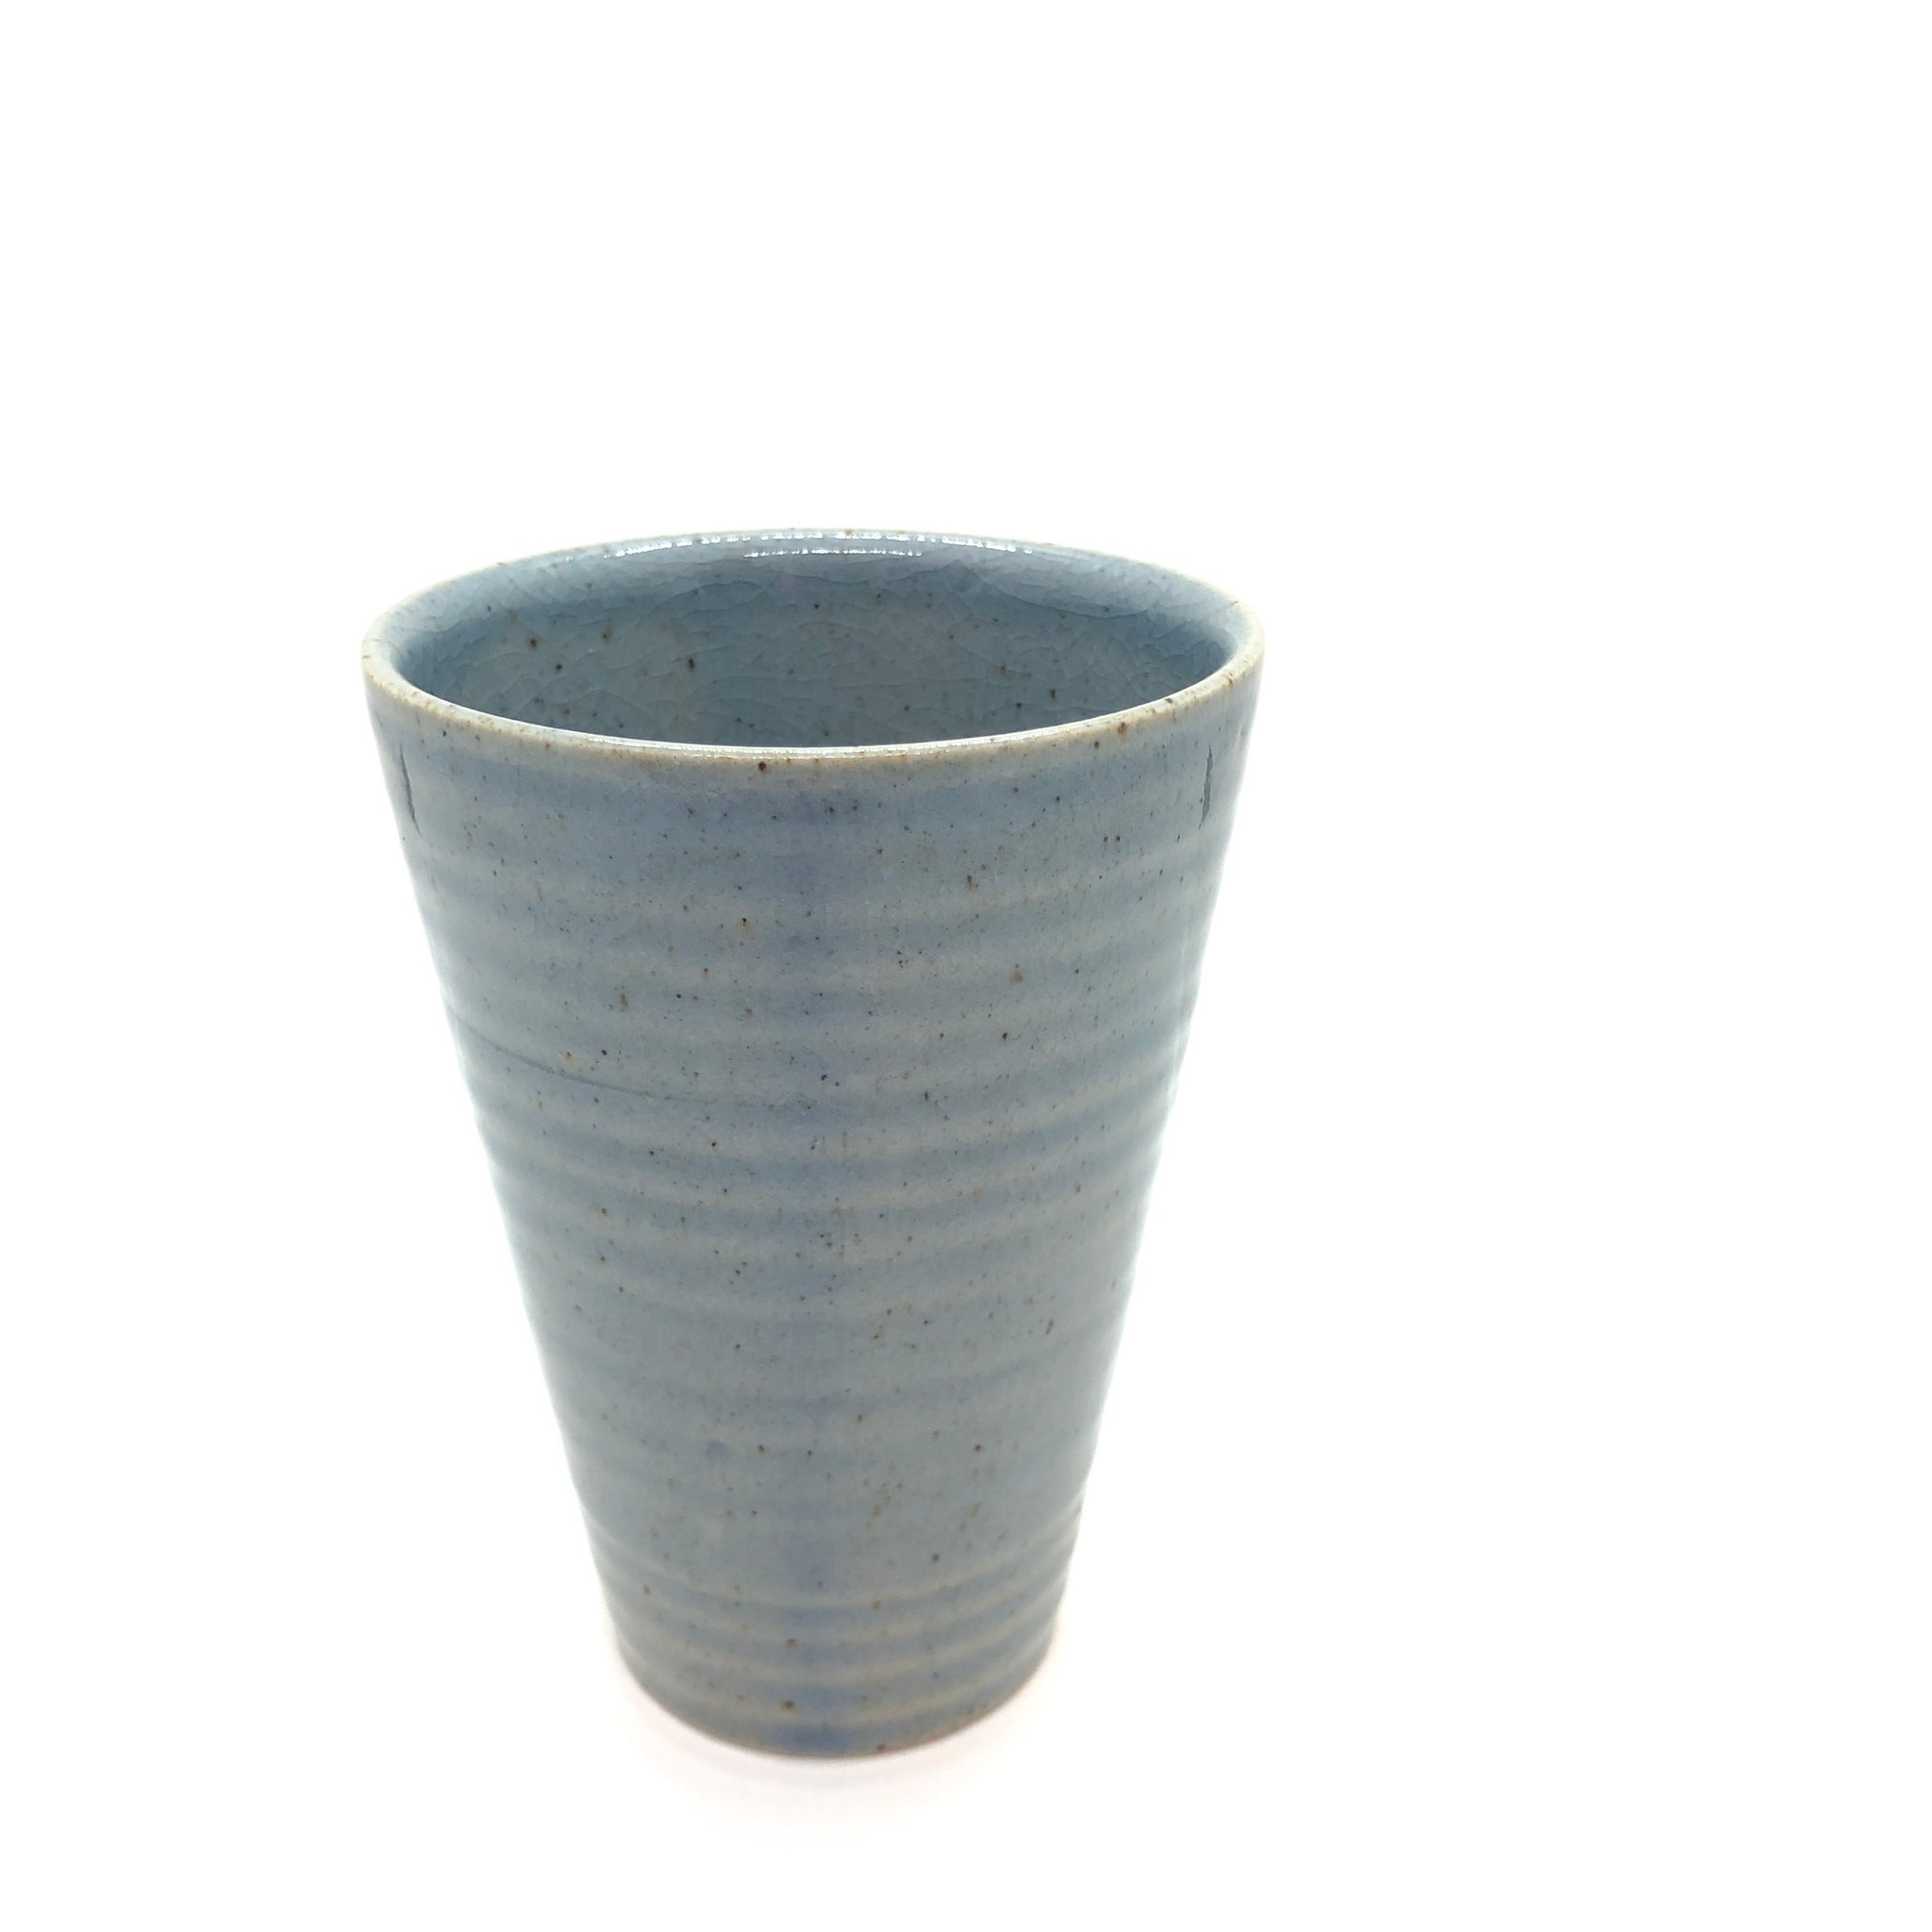 Blue Funnel Mug, Textured Spiral Encircling Mug Exterior, Glossy Cracked Pattern, Slightly Speckled, Handmade